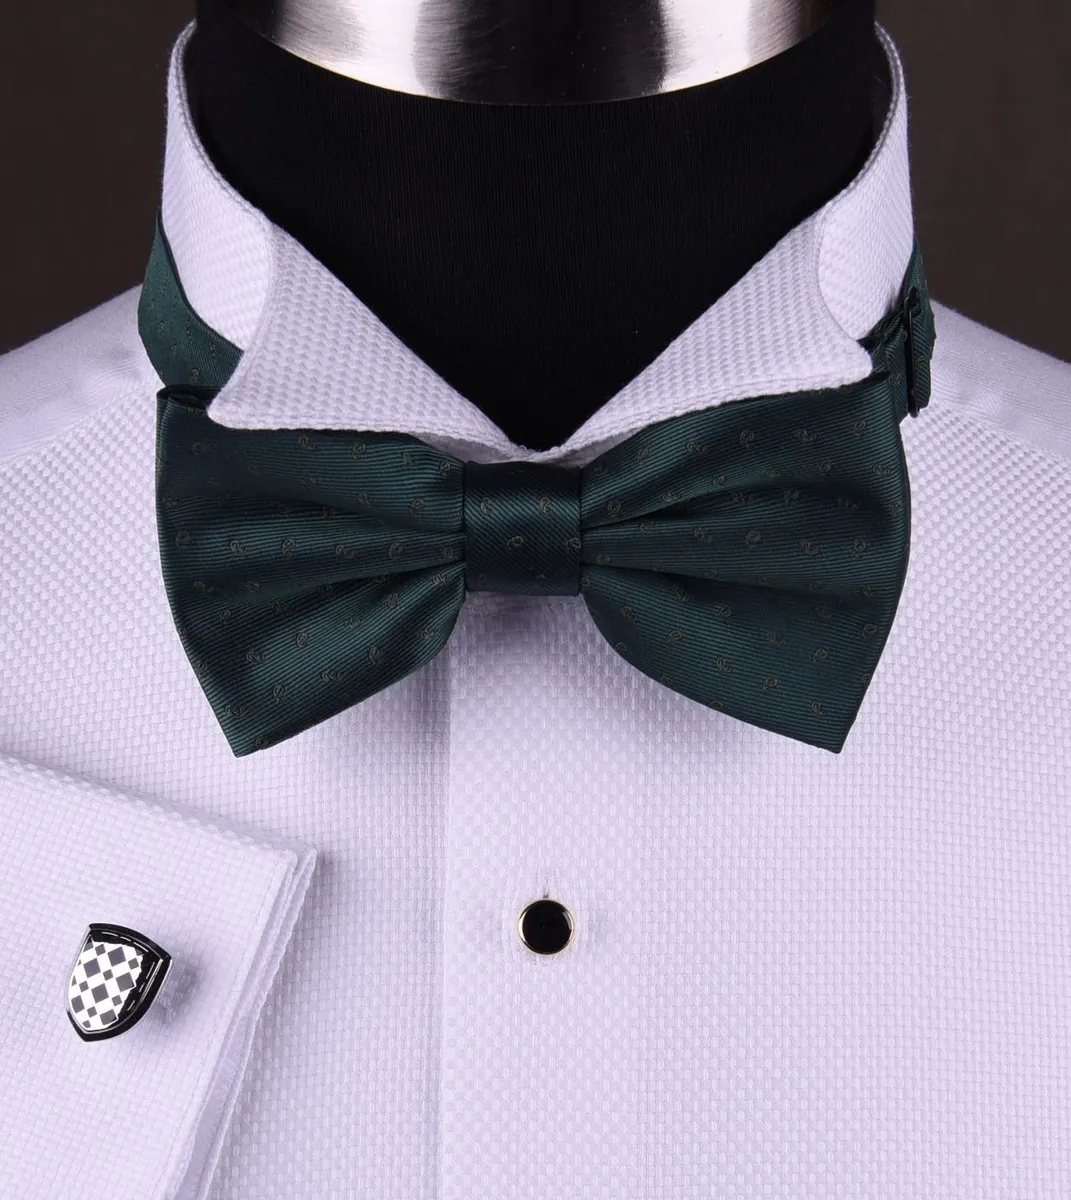 White Luxury Tuxedo Formal Shirt Evening Party Dinner Black Bow Tie | eBay